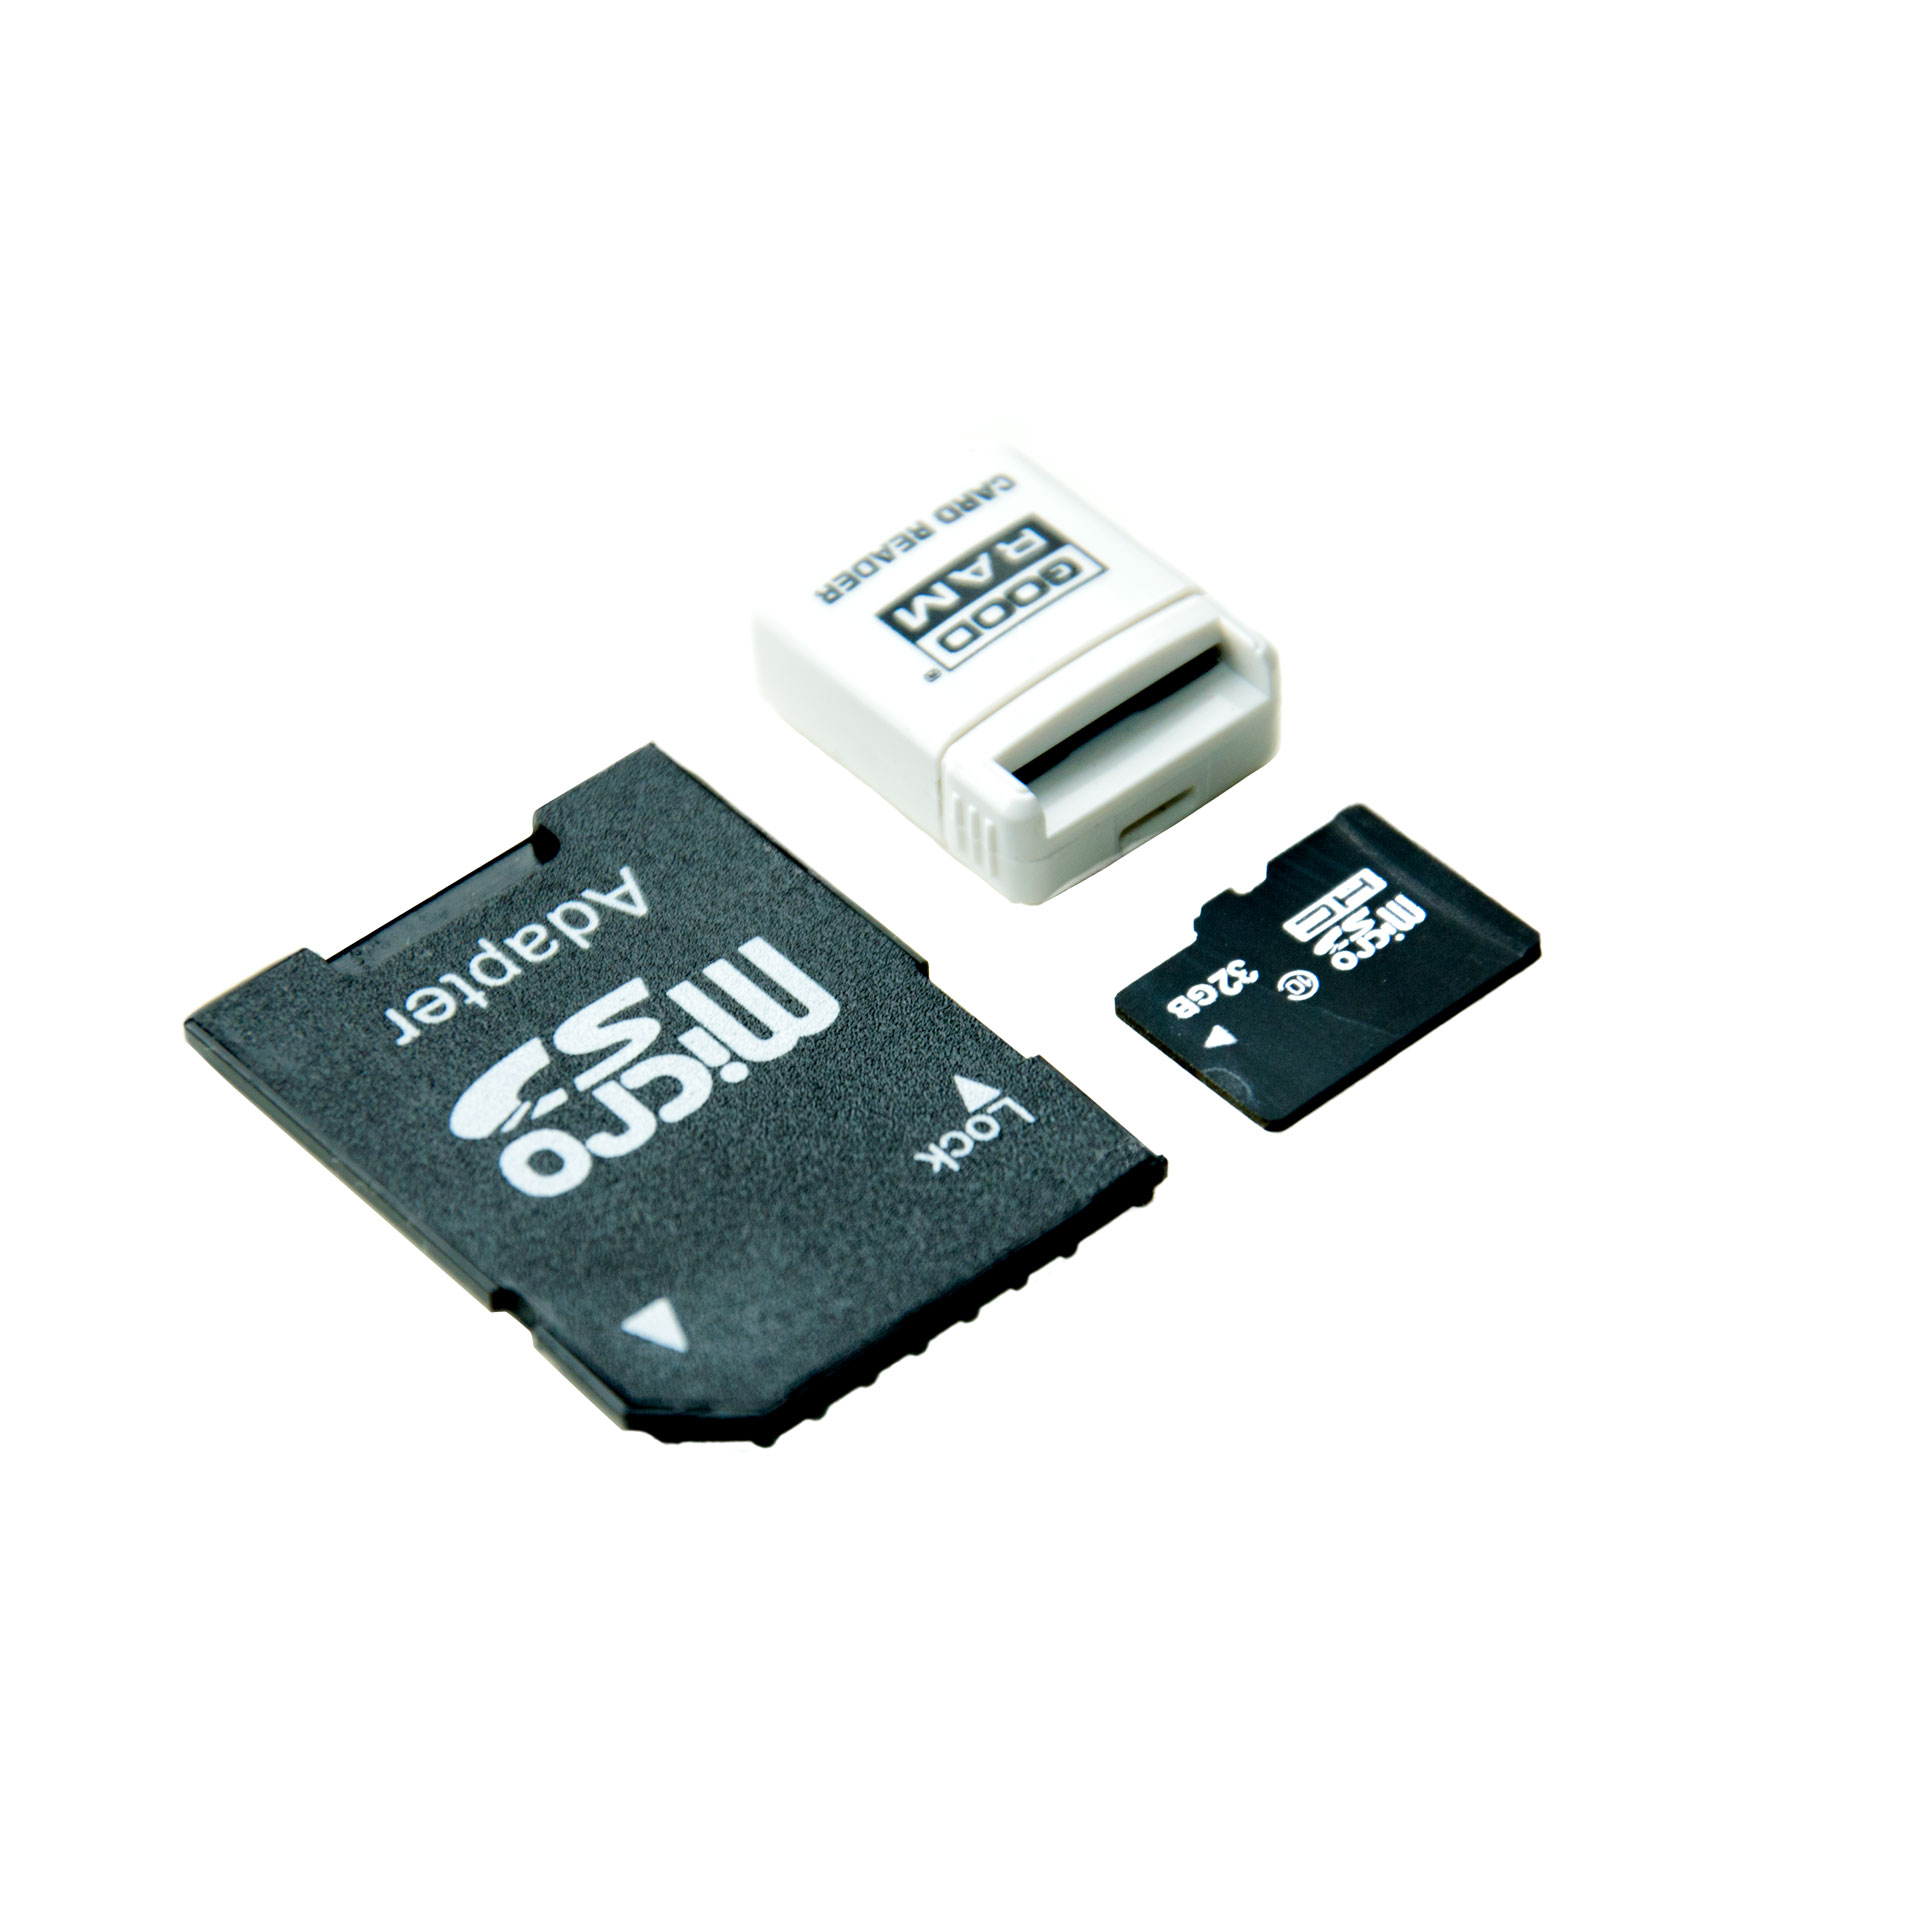 MicroSD HC 32GB USB stick card reader SD adapter - Lisconet